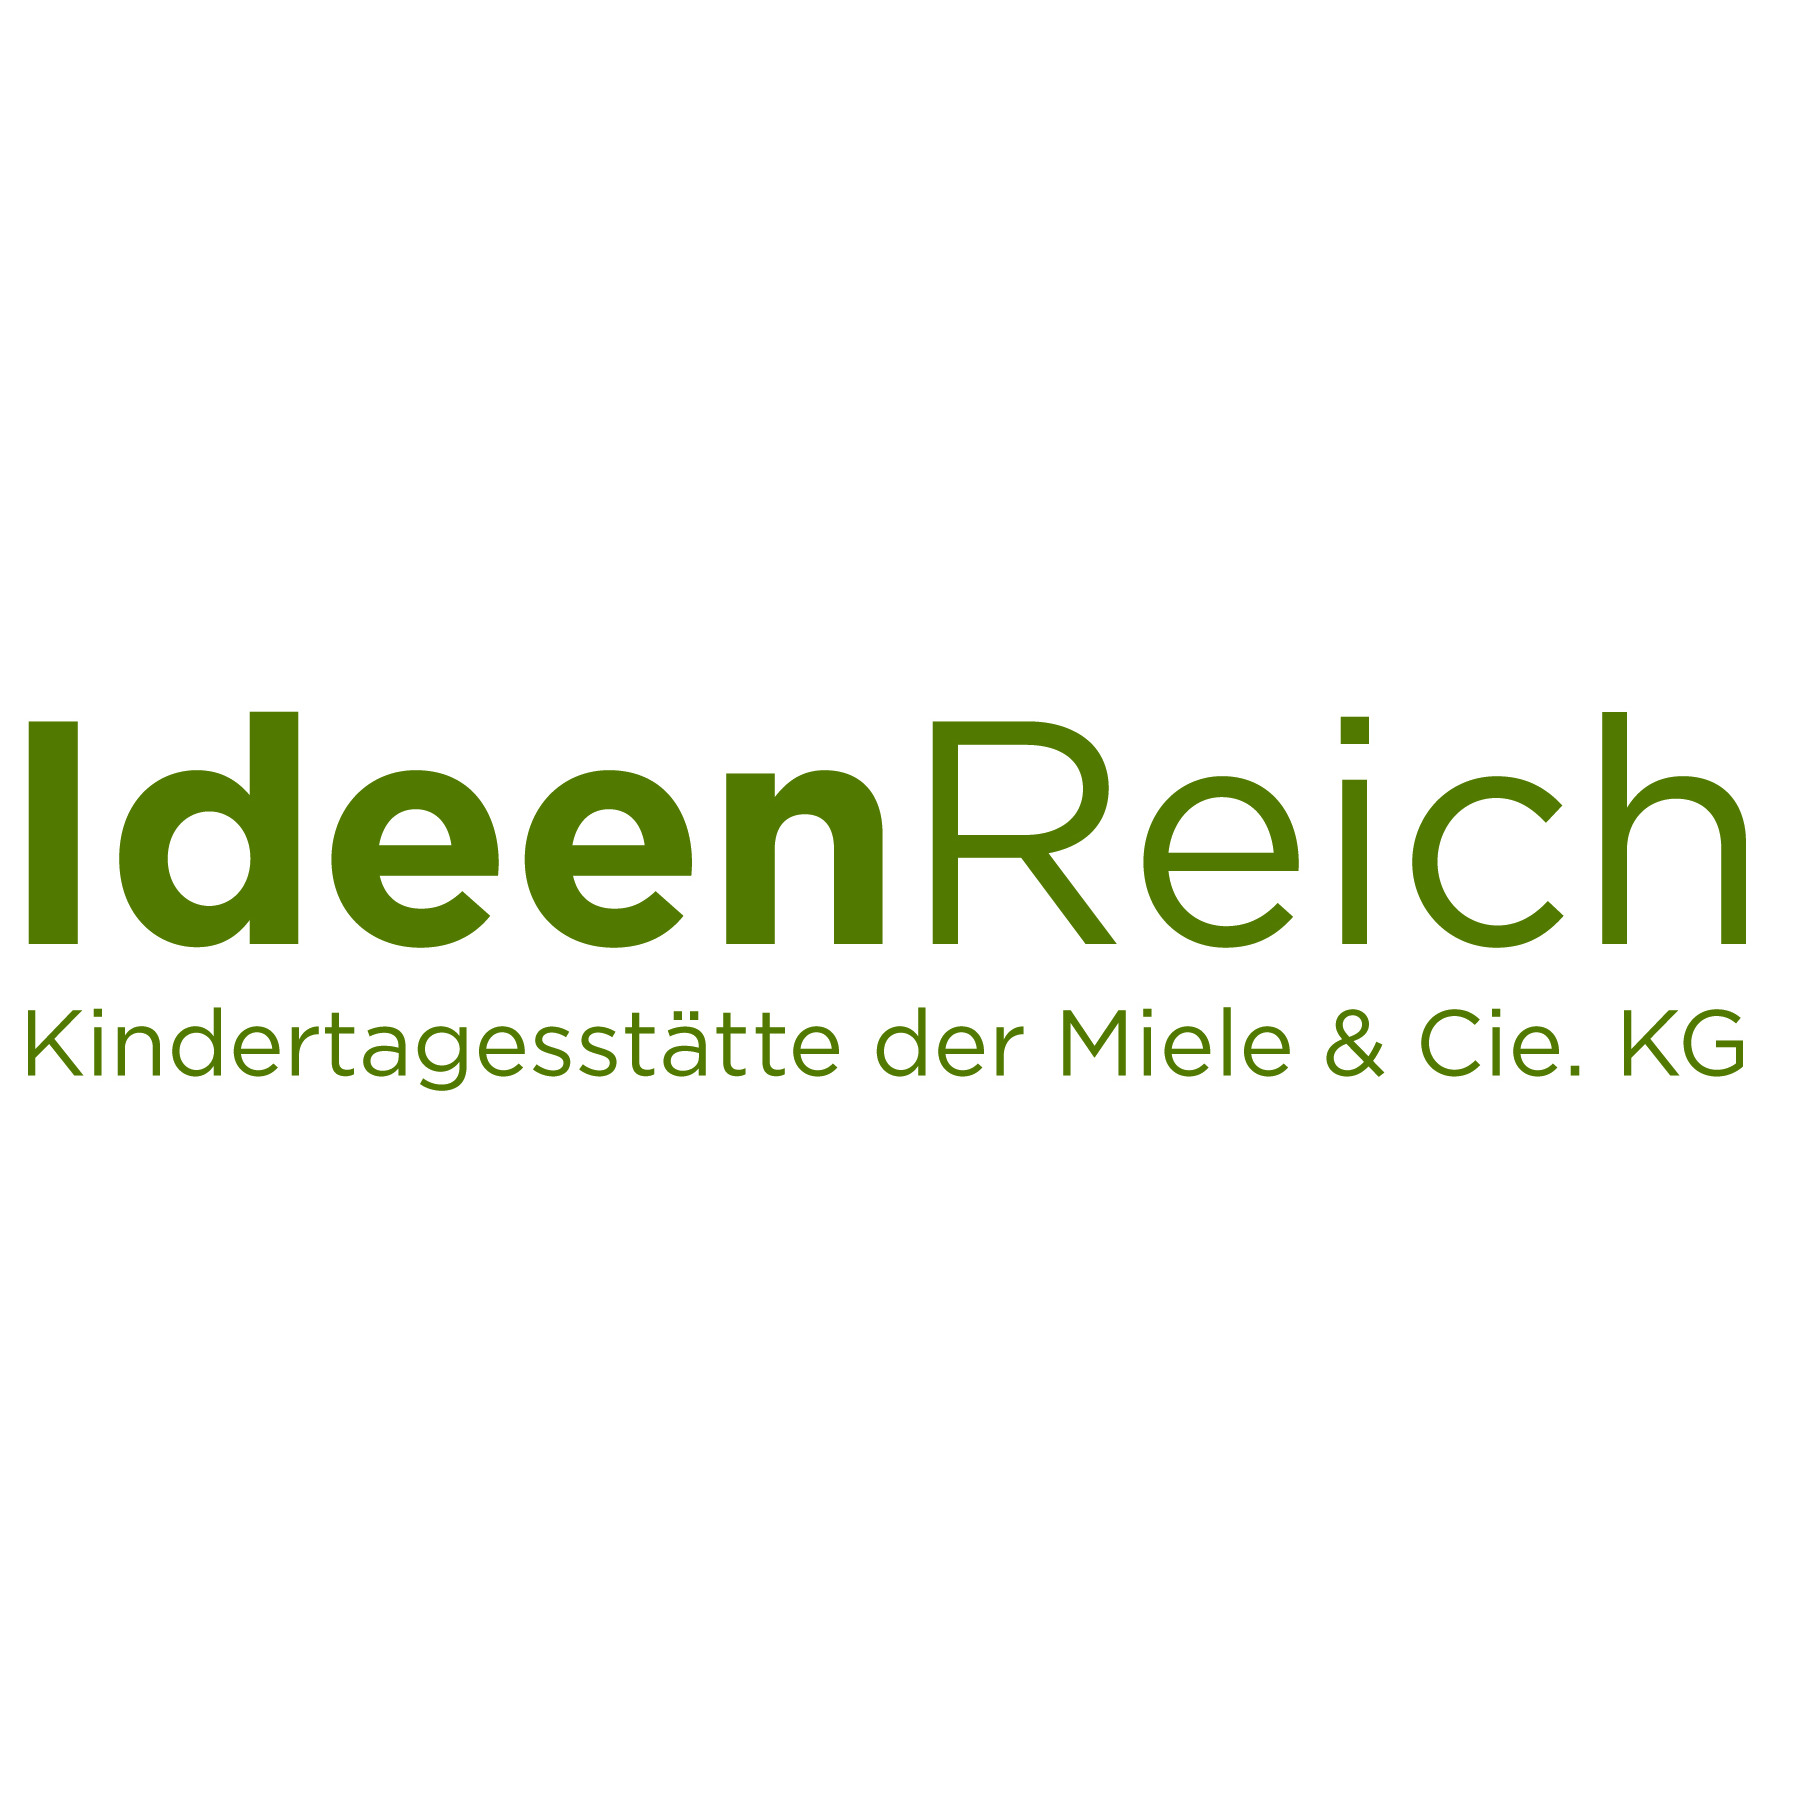 IdeenReich - pme Familienservice in Gütersloh - Logo